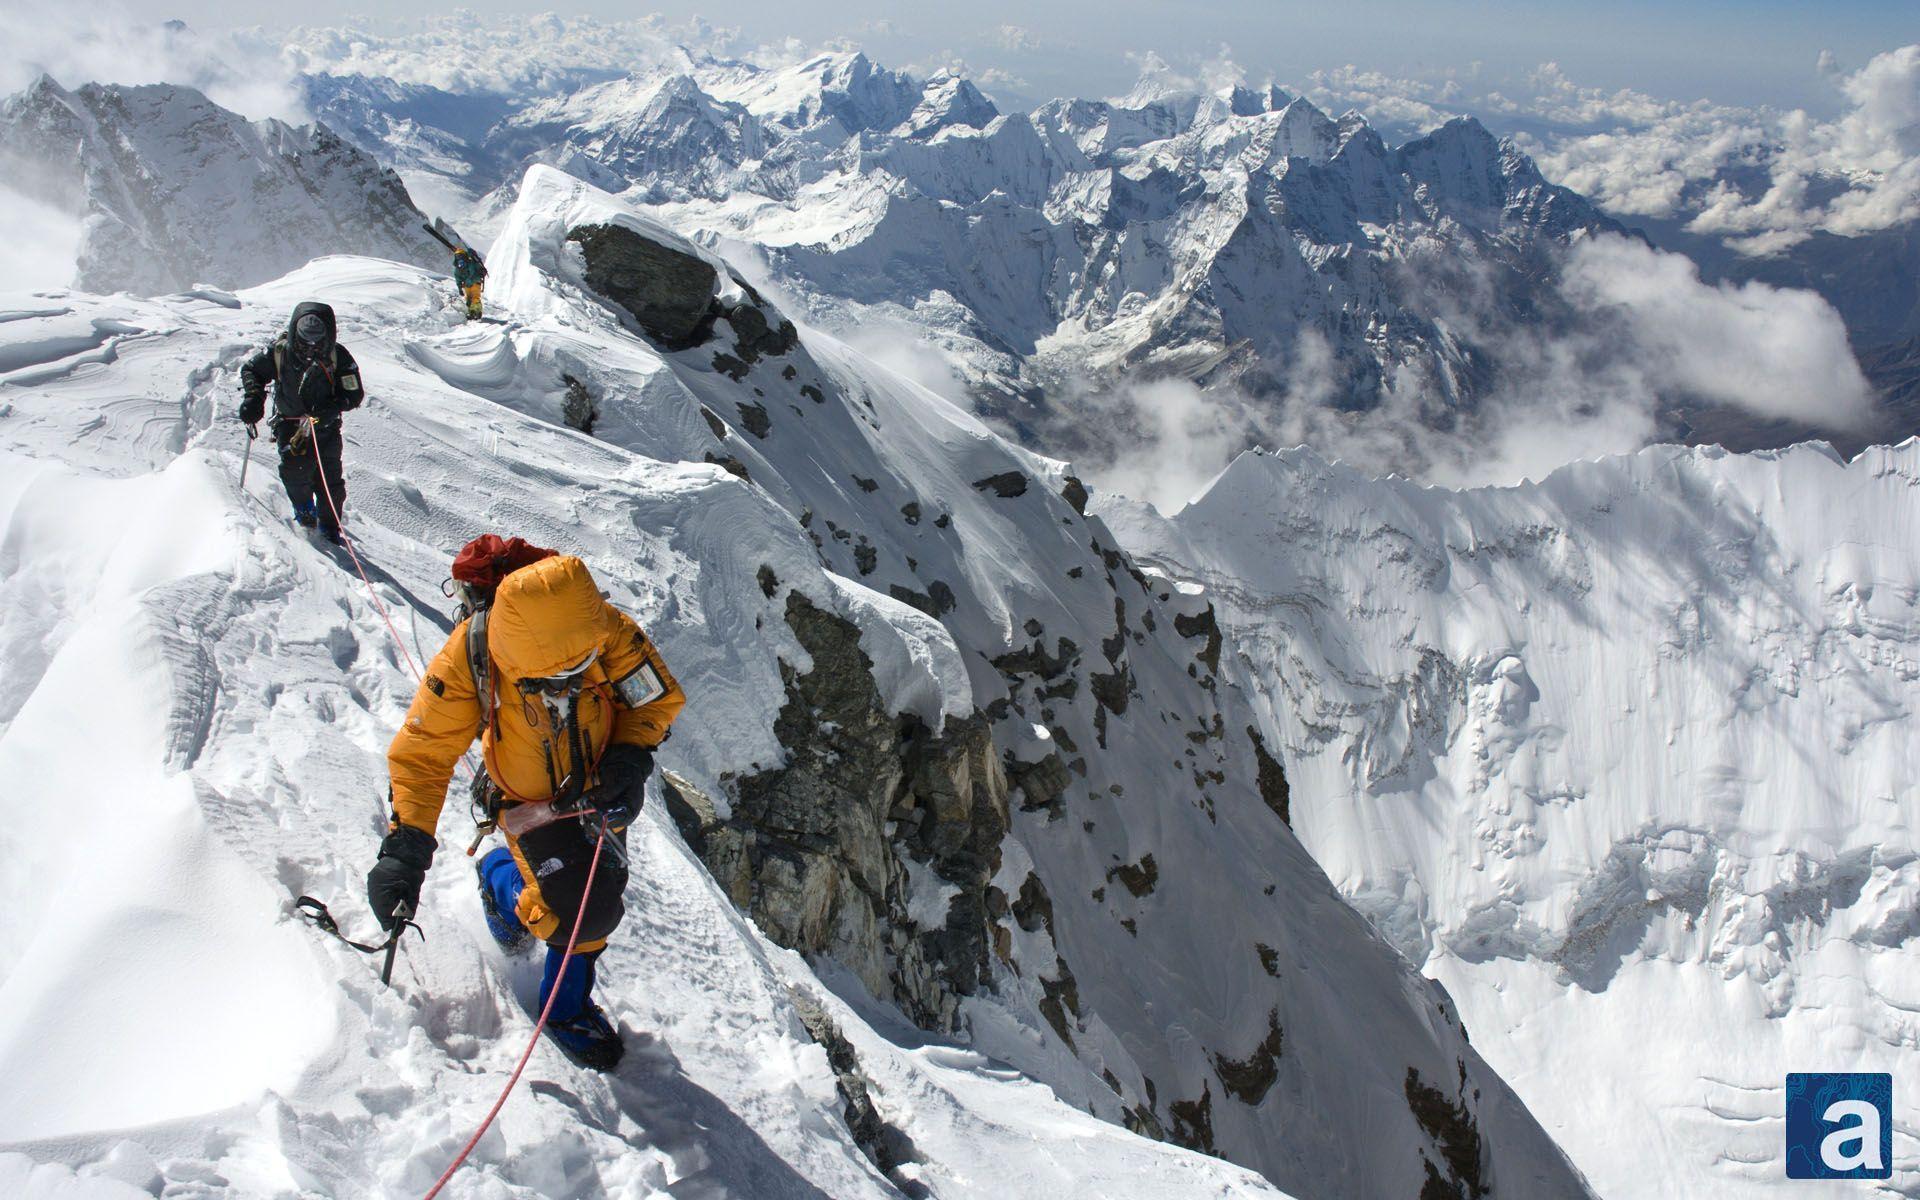 Wallpaper Wednesday: Mount Everest Summit